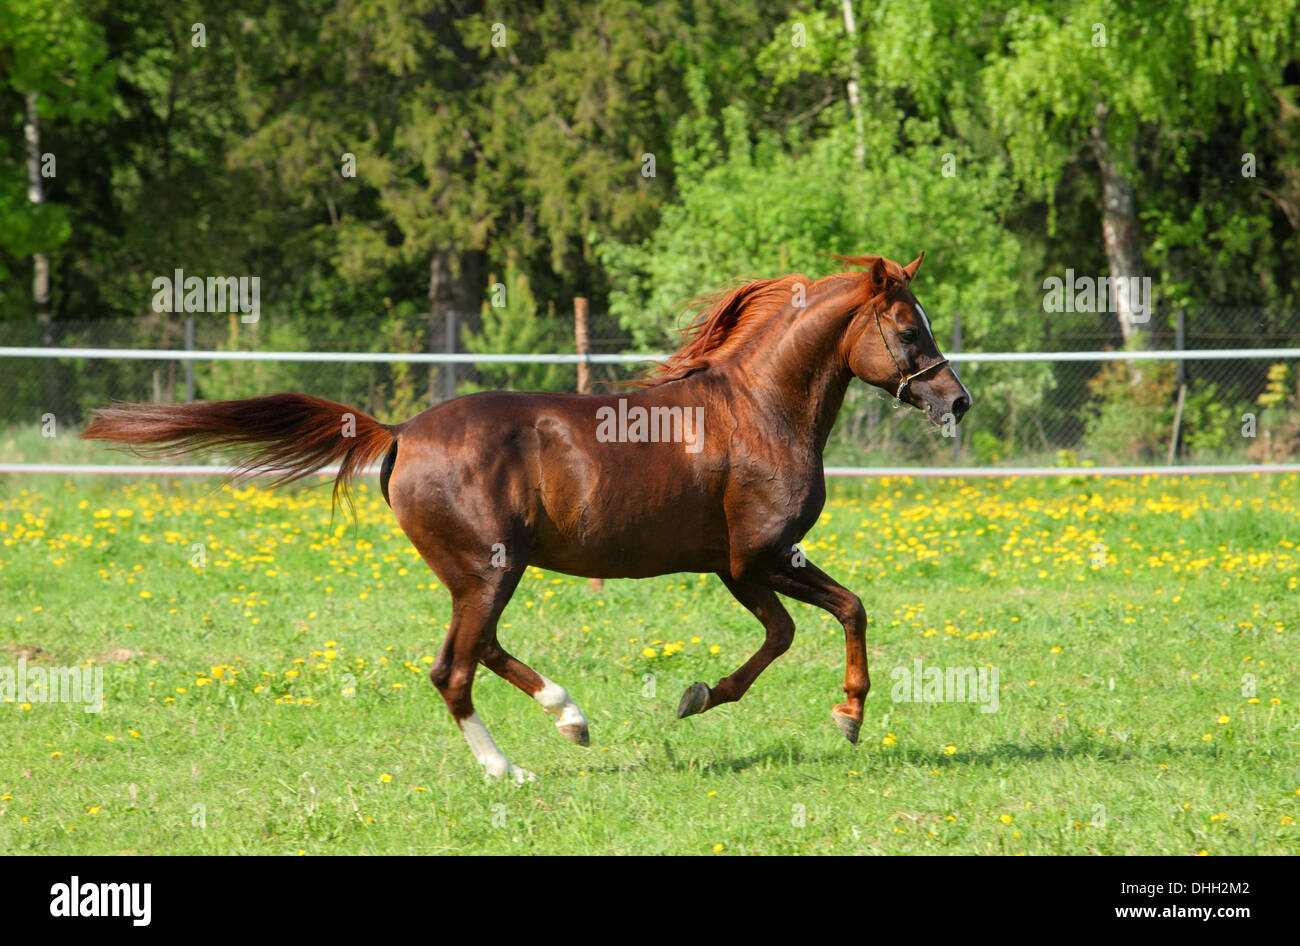 Arabian Horse Chestnut stallion galloping a meadow Stock Photo